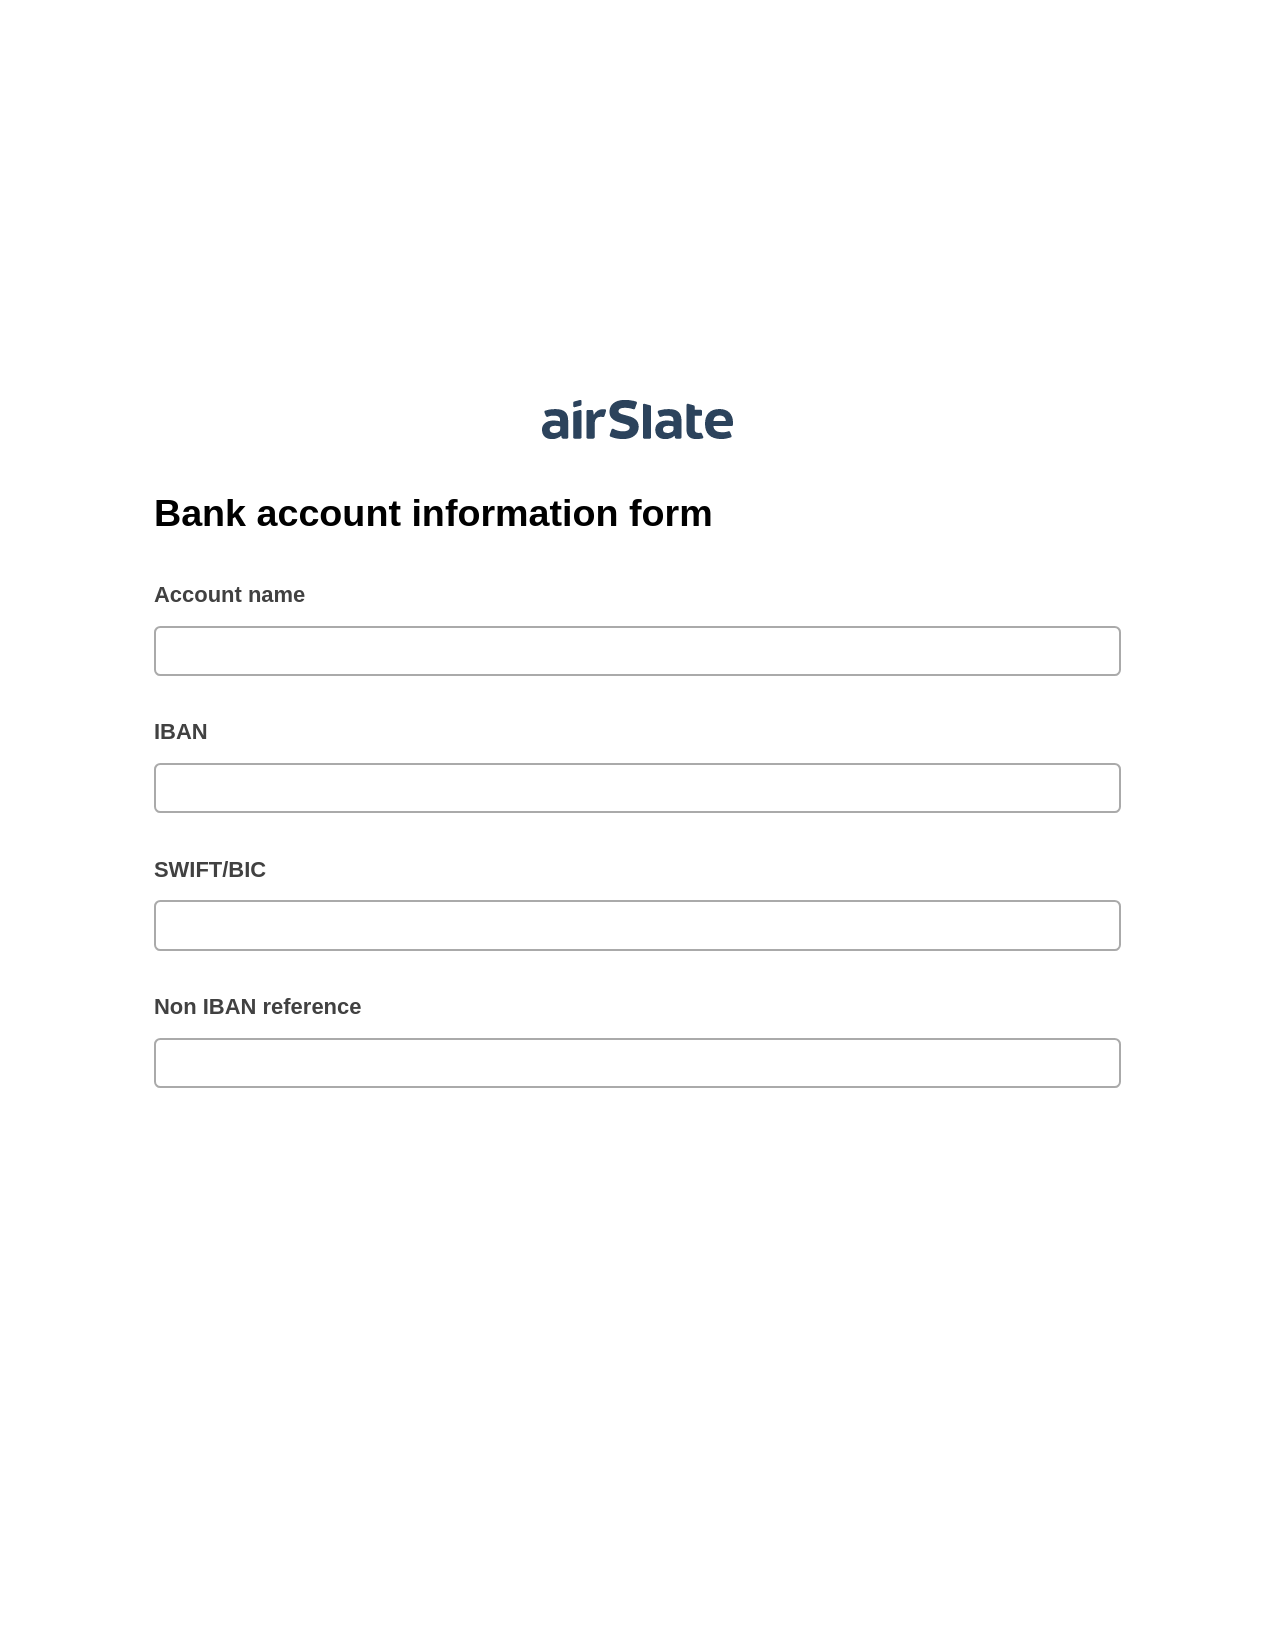 Bank account information form Pre-fill from MySQL Dropdown Options Bot, Slack Notification Bot, Webhook Postfinish Bot